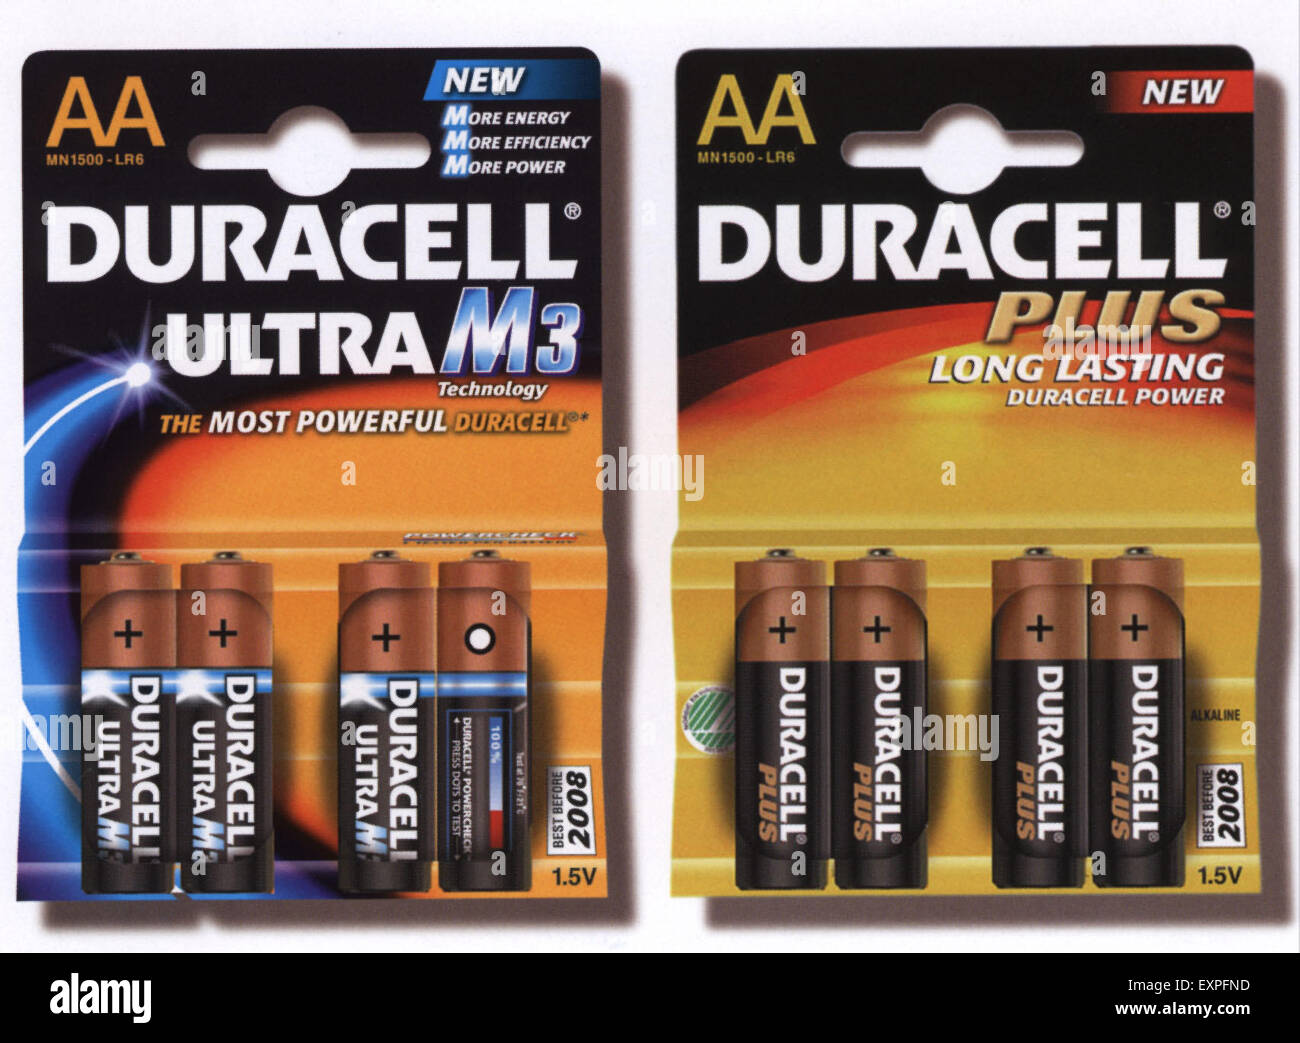 2000er Jahre UK Duracell Promotion Stockfoto